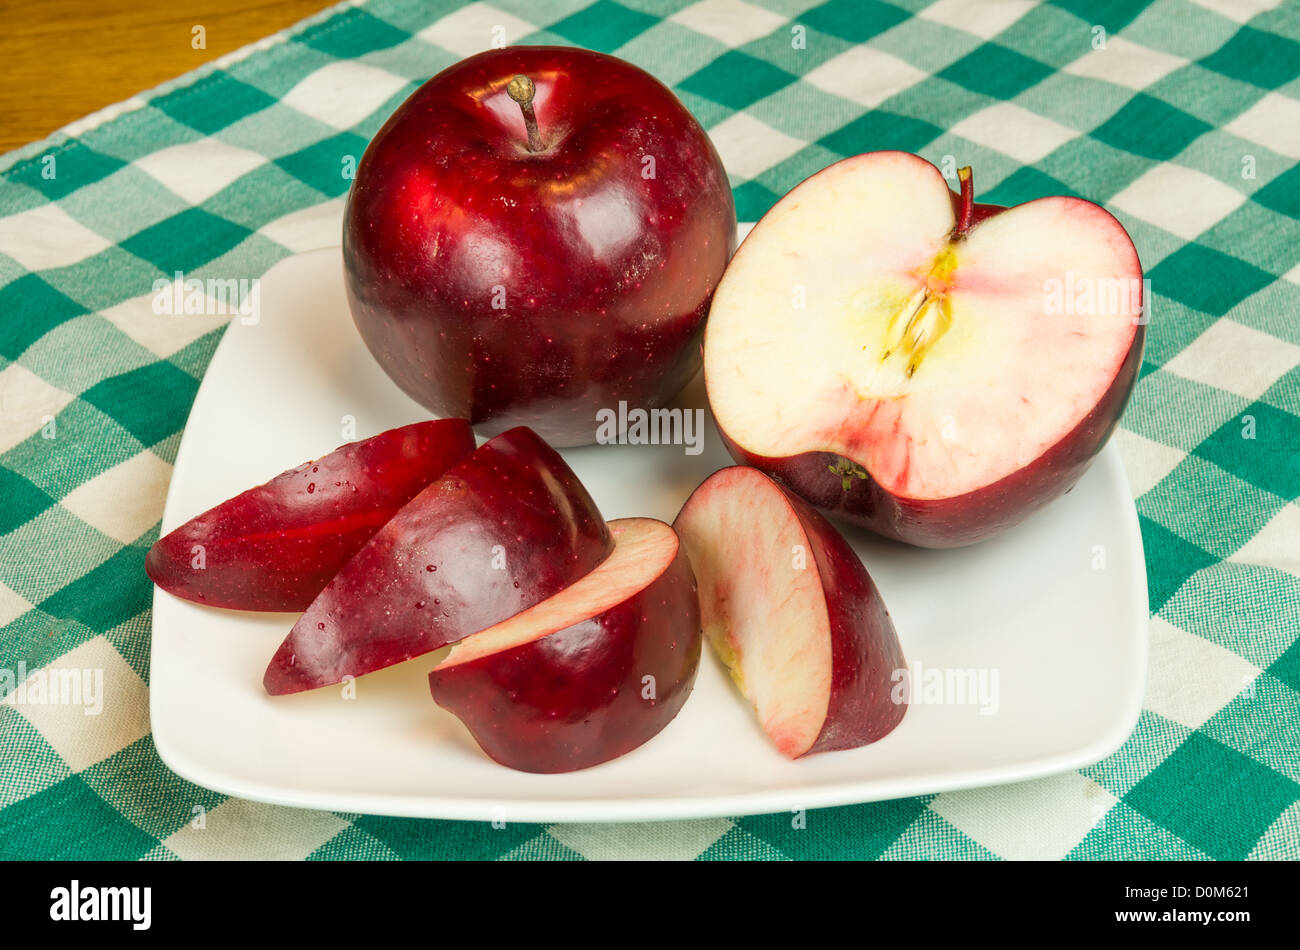 Rome Beauty apple sliced on white plate Stock Photo